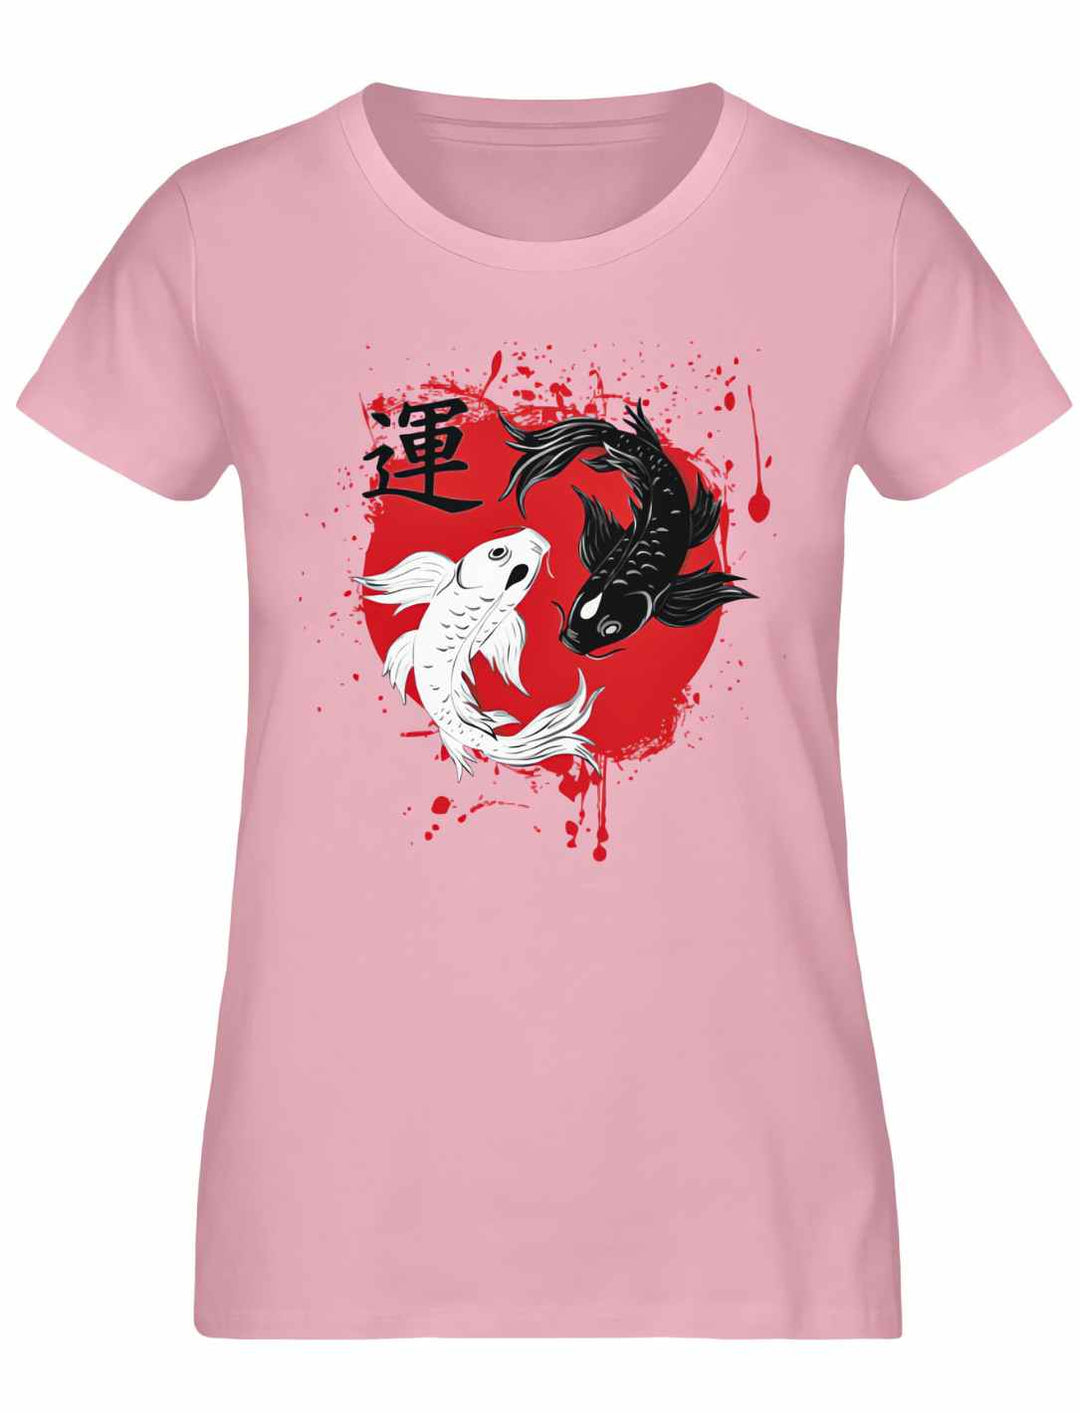 Harmonic Koi Damen T-Shirt in Cotton Pink Rose – Feminines Design mit japanischem Flair